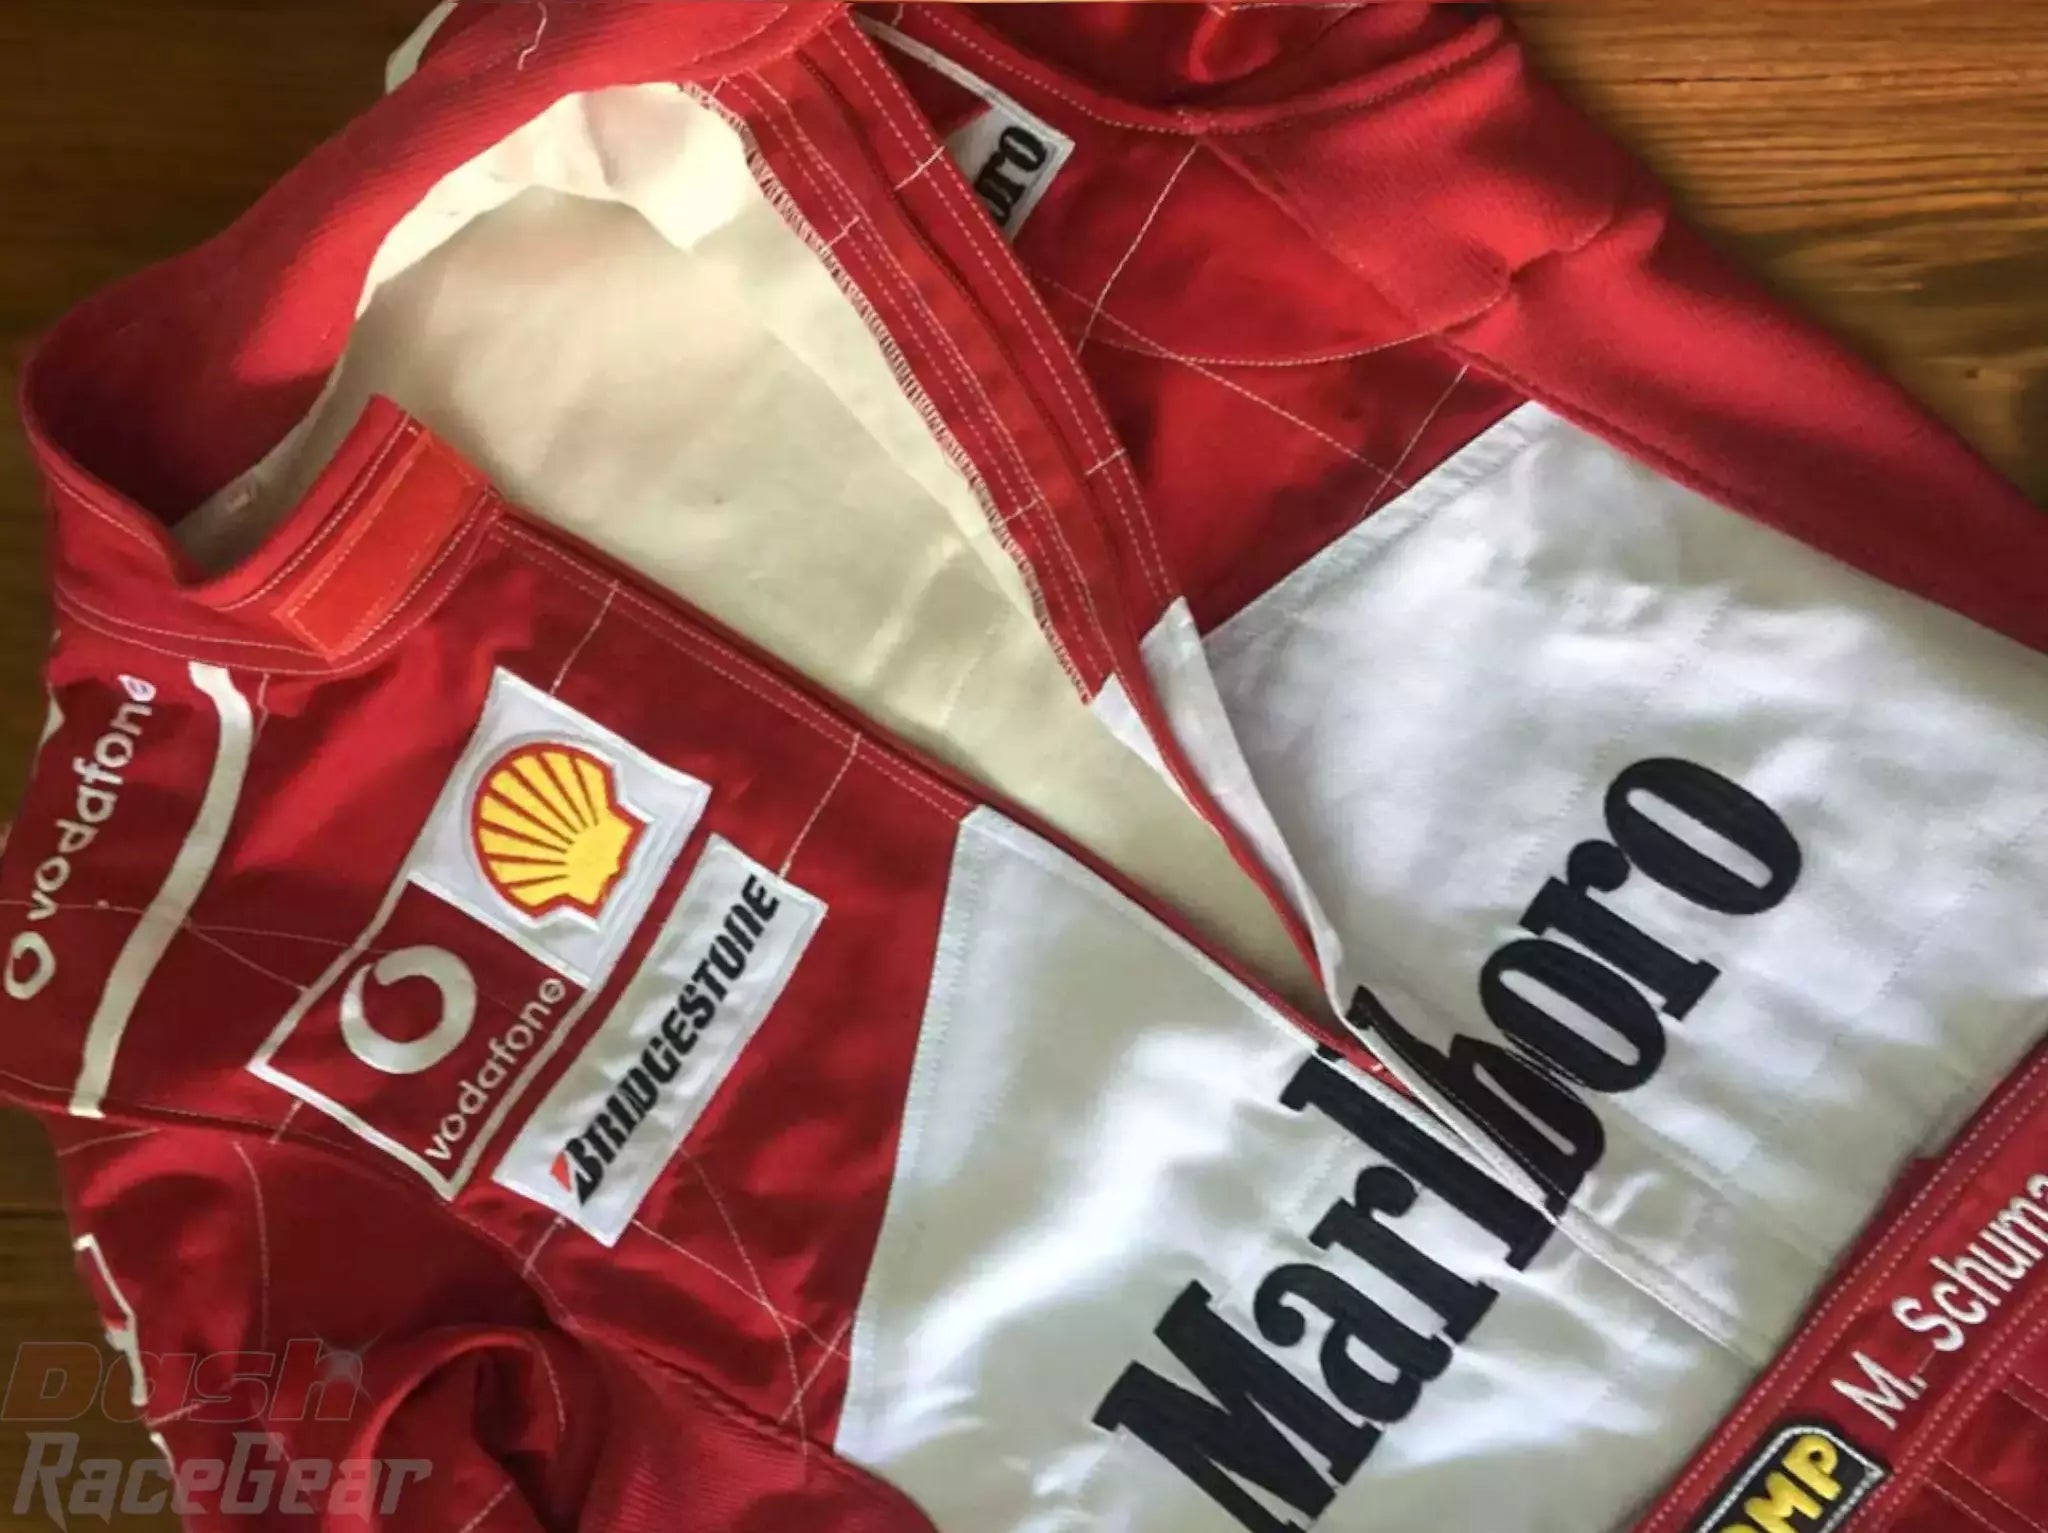 2004 Michael Schumacher Ferrari F1 Embroidered Racing Suit